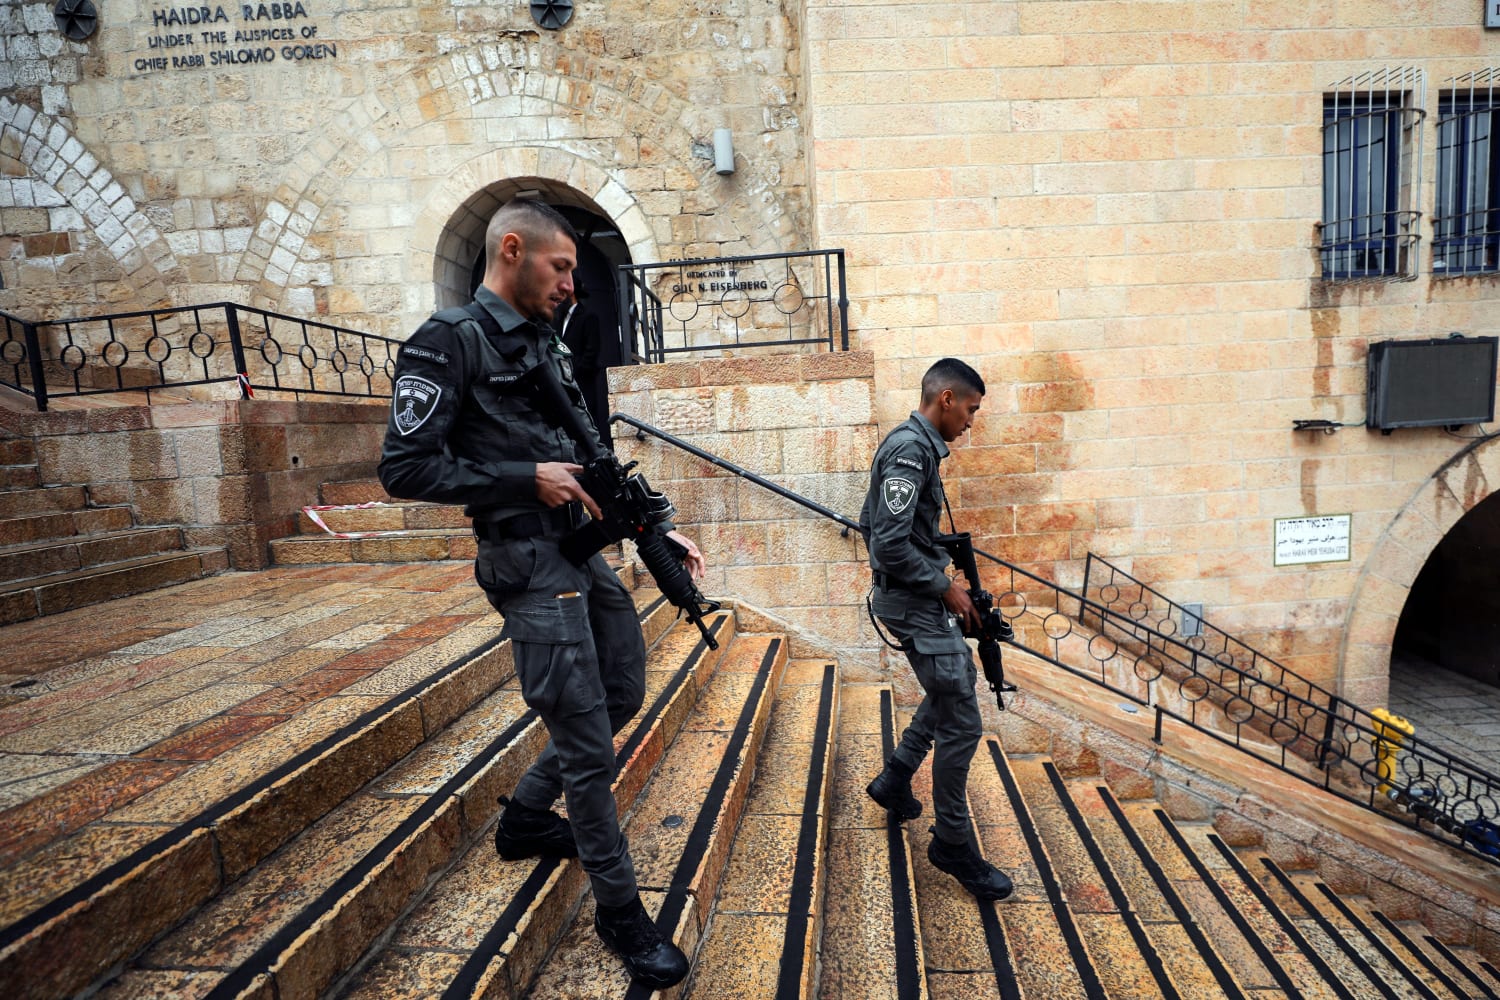 ‘Shooting attack’ by Hamas gunman in Jerusalem’s Old City kills 1, injures 4